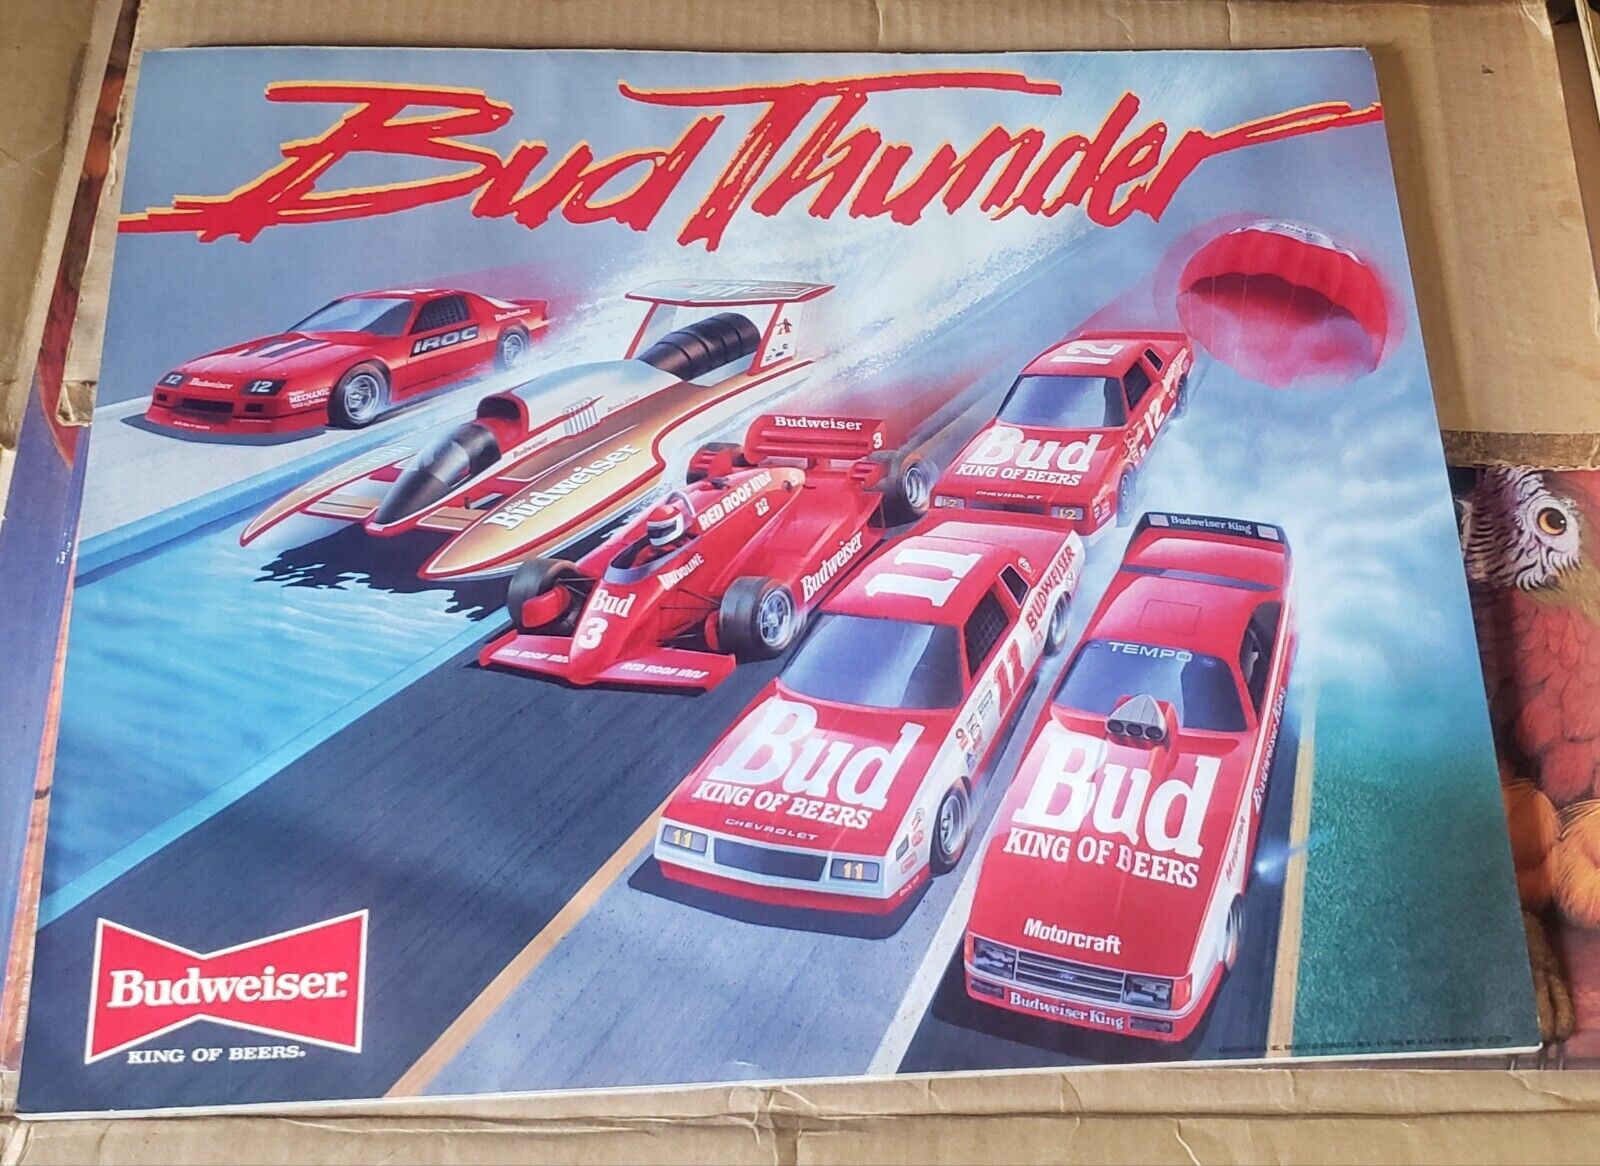 BUD THUNDER Budweiser racing NOS Vintage beer promo poster. Nascar Indy car Iroc